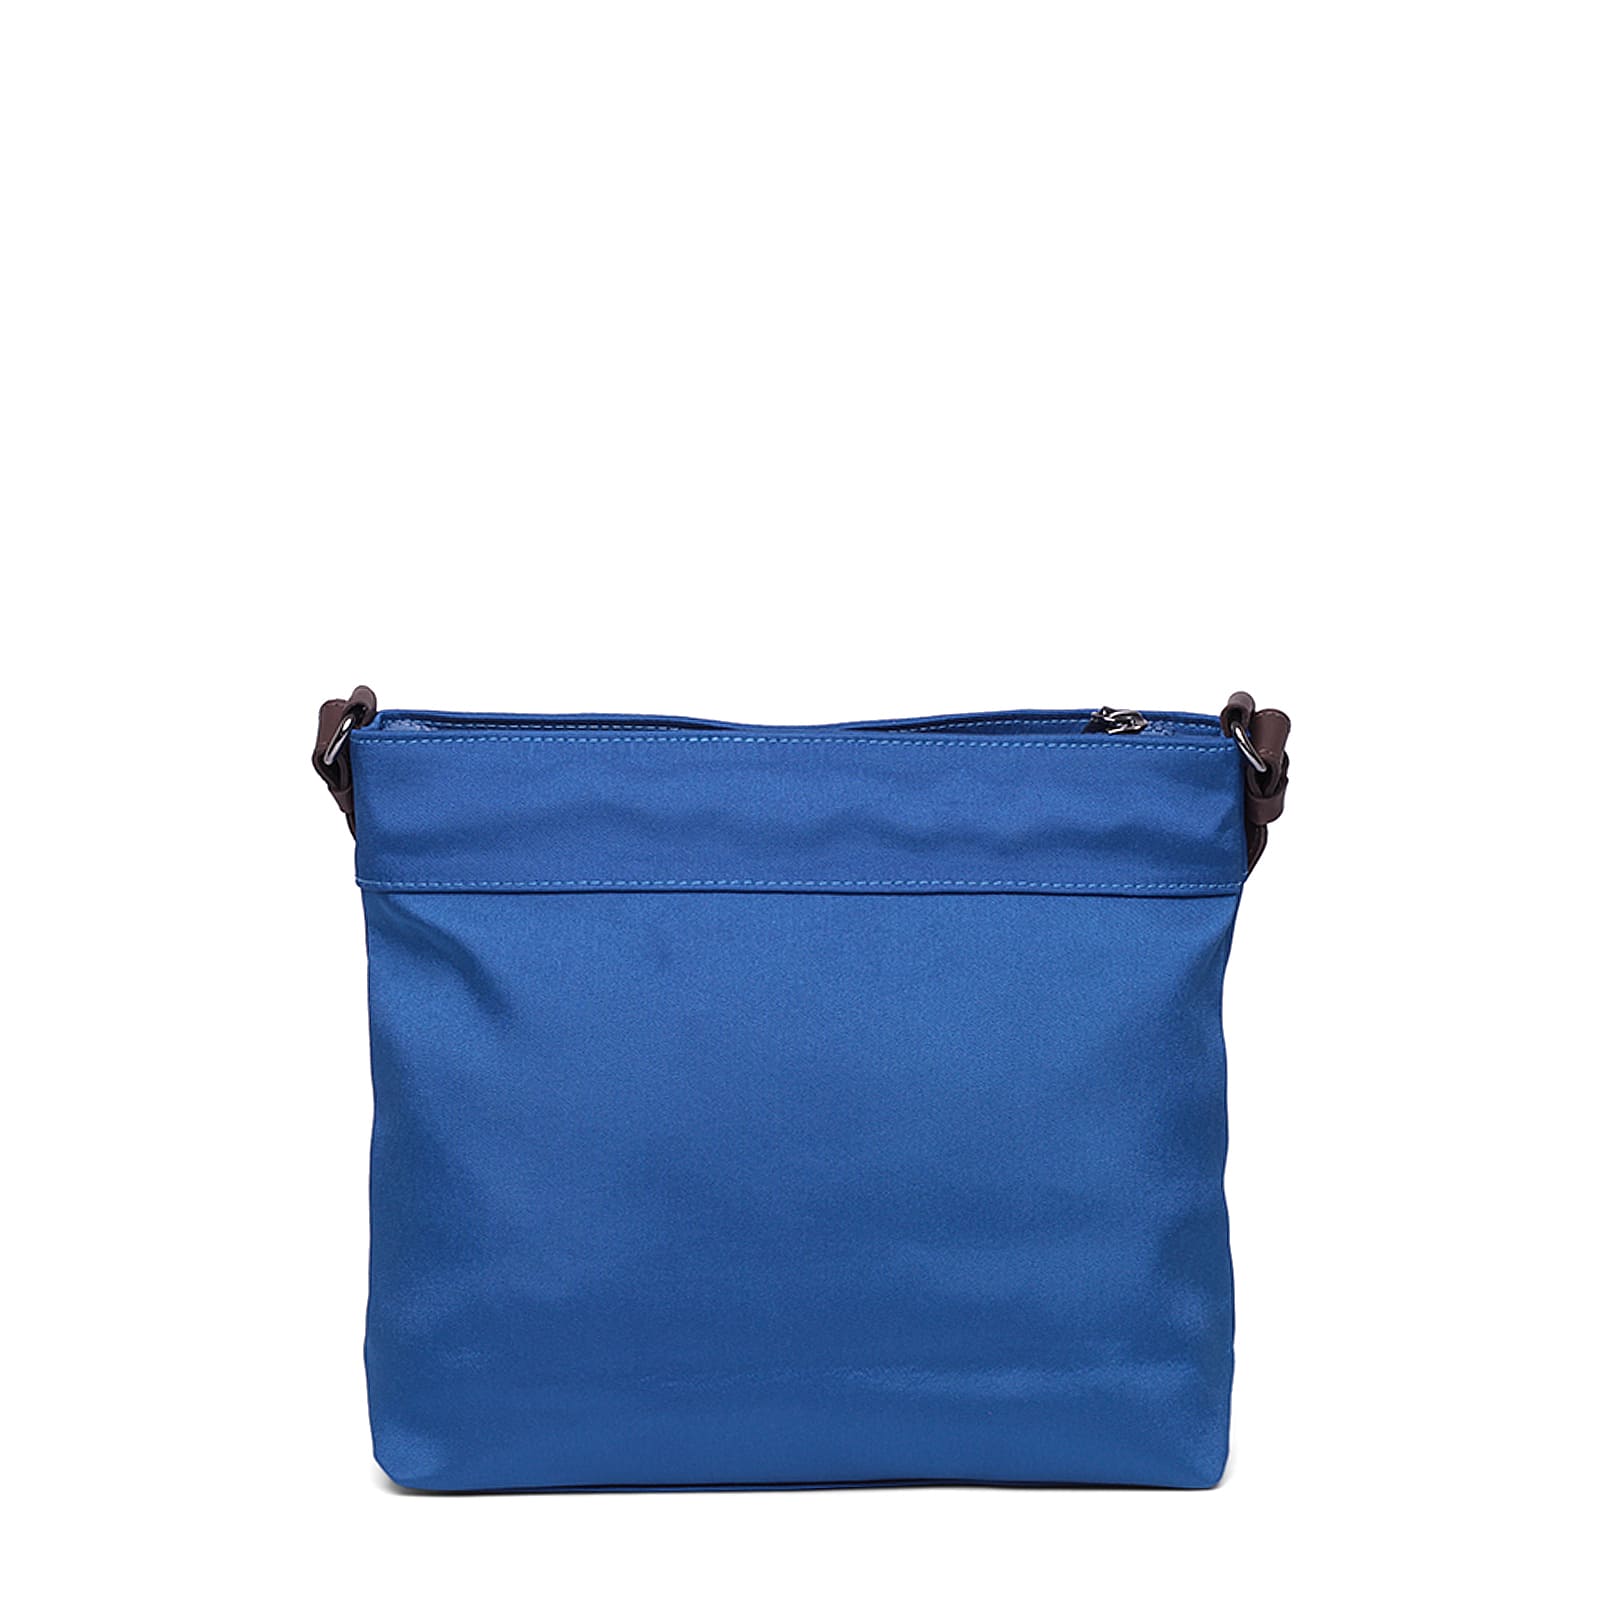 bolsa-nylon-61090-v24-unclek-azul-escuro-5